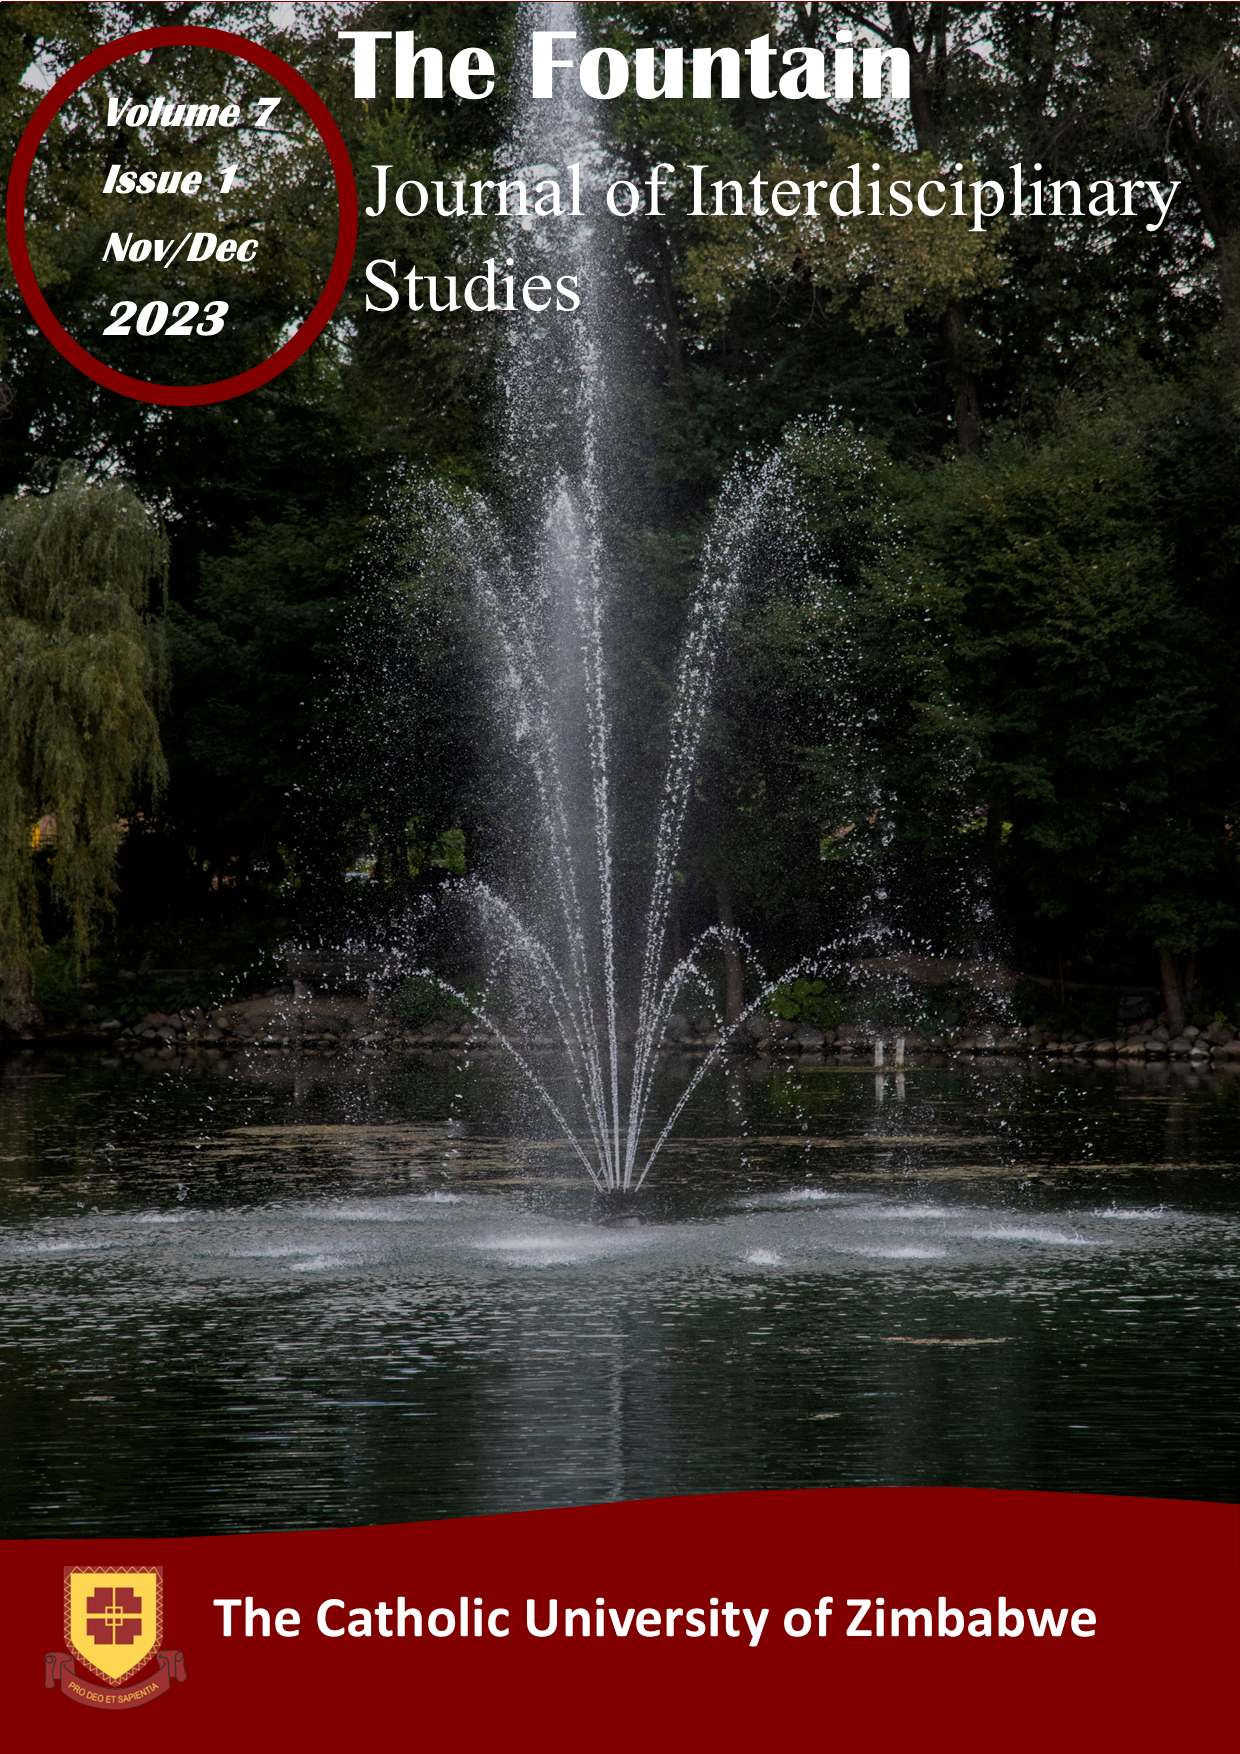 					View Vol. 7 No. 1 (2023): The Fountain Journal of Interdisciplinary Studies (FJIS)
				